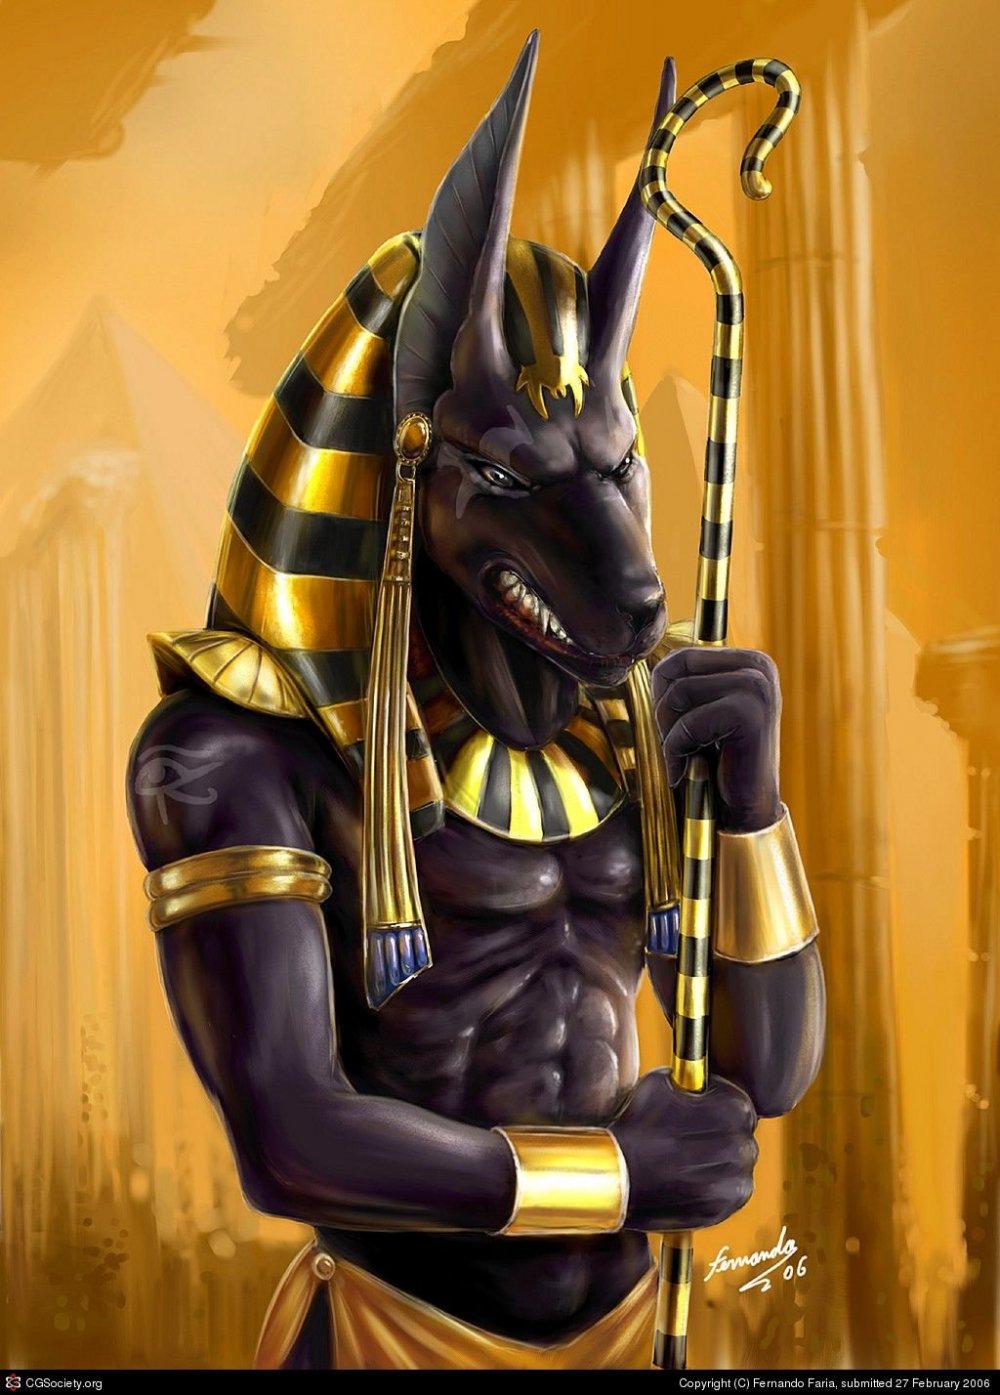 Бастет богиня Египта арт